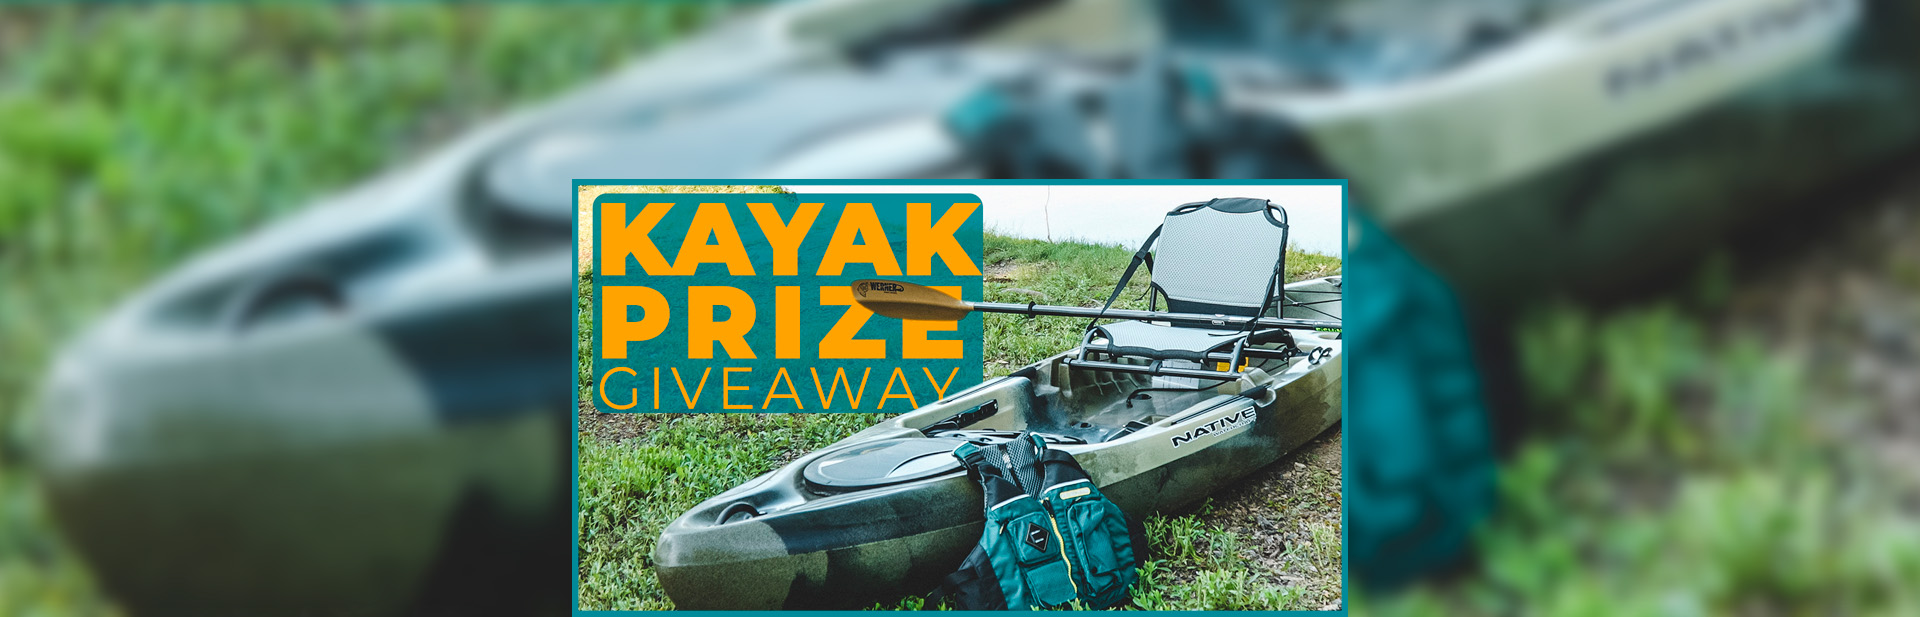 Kayak Prize Giveaway graphic